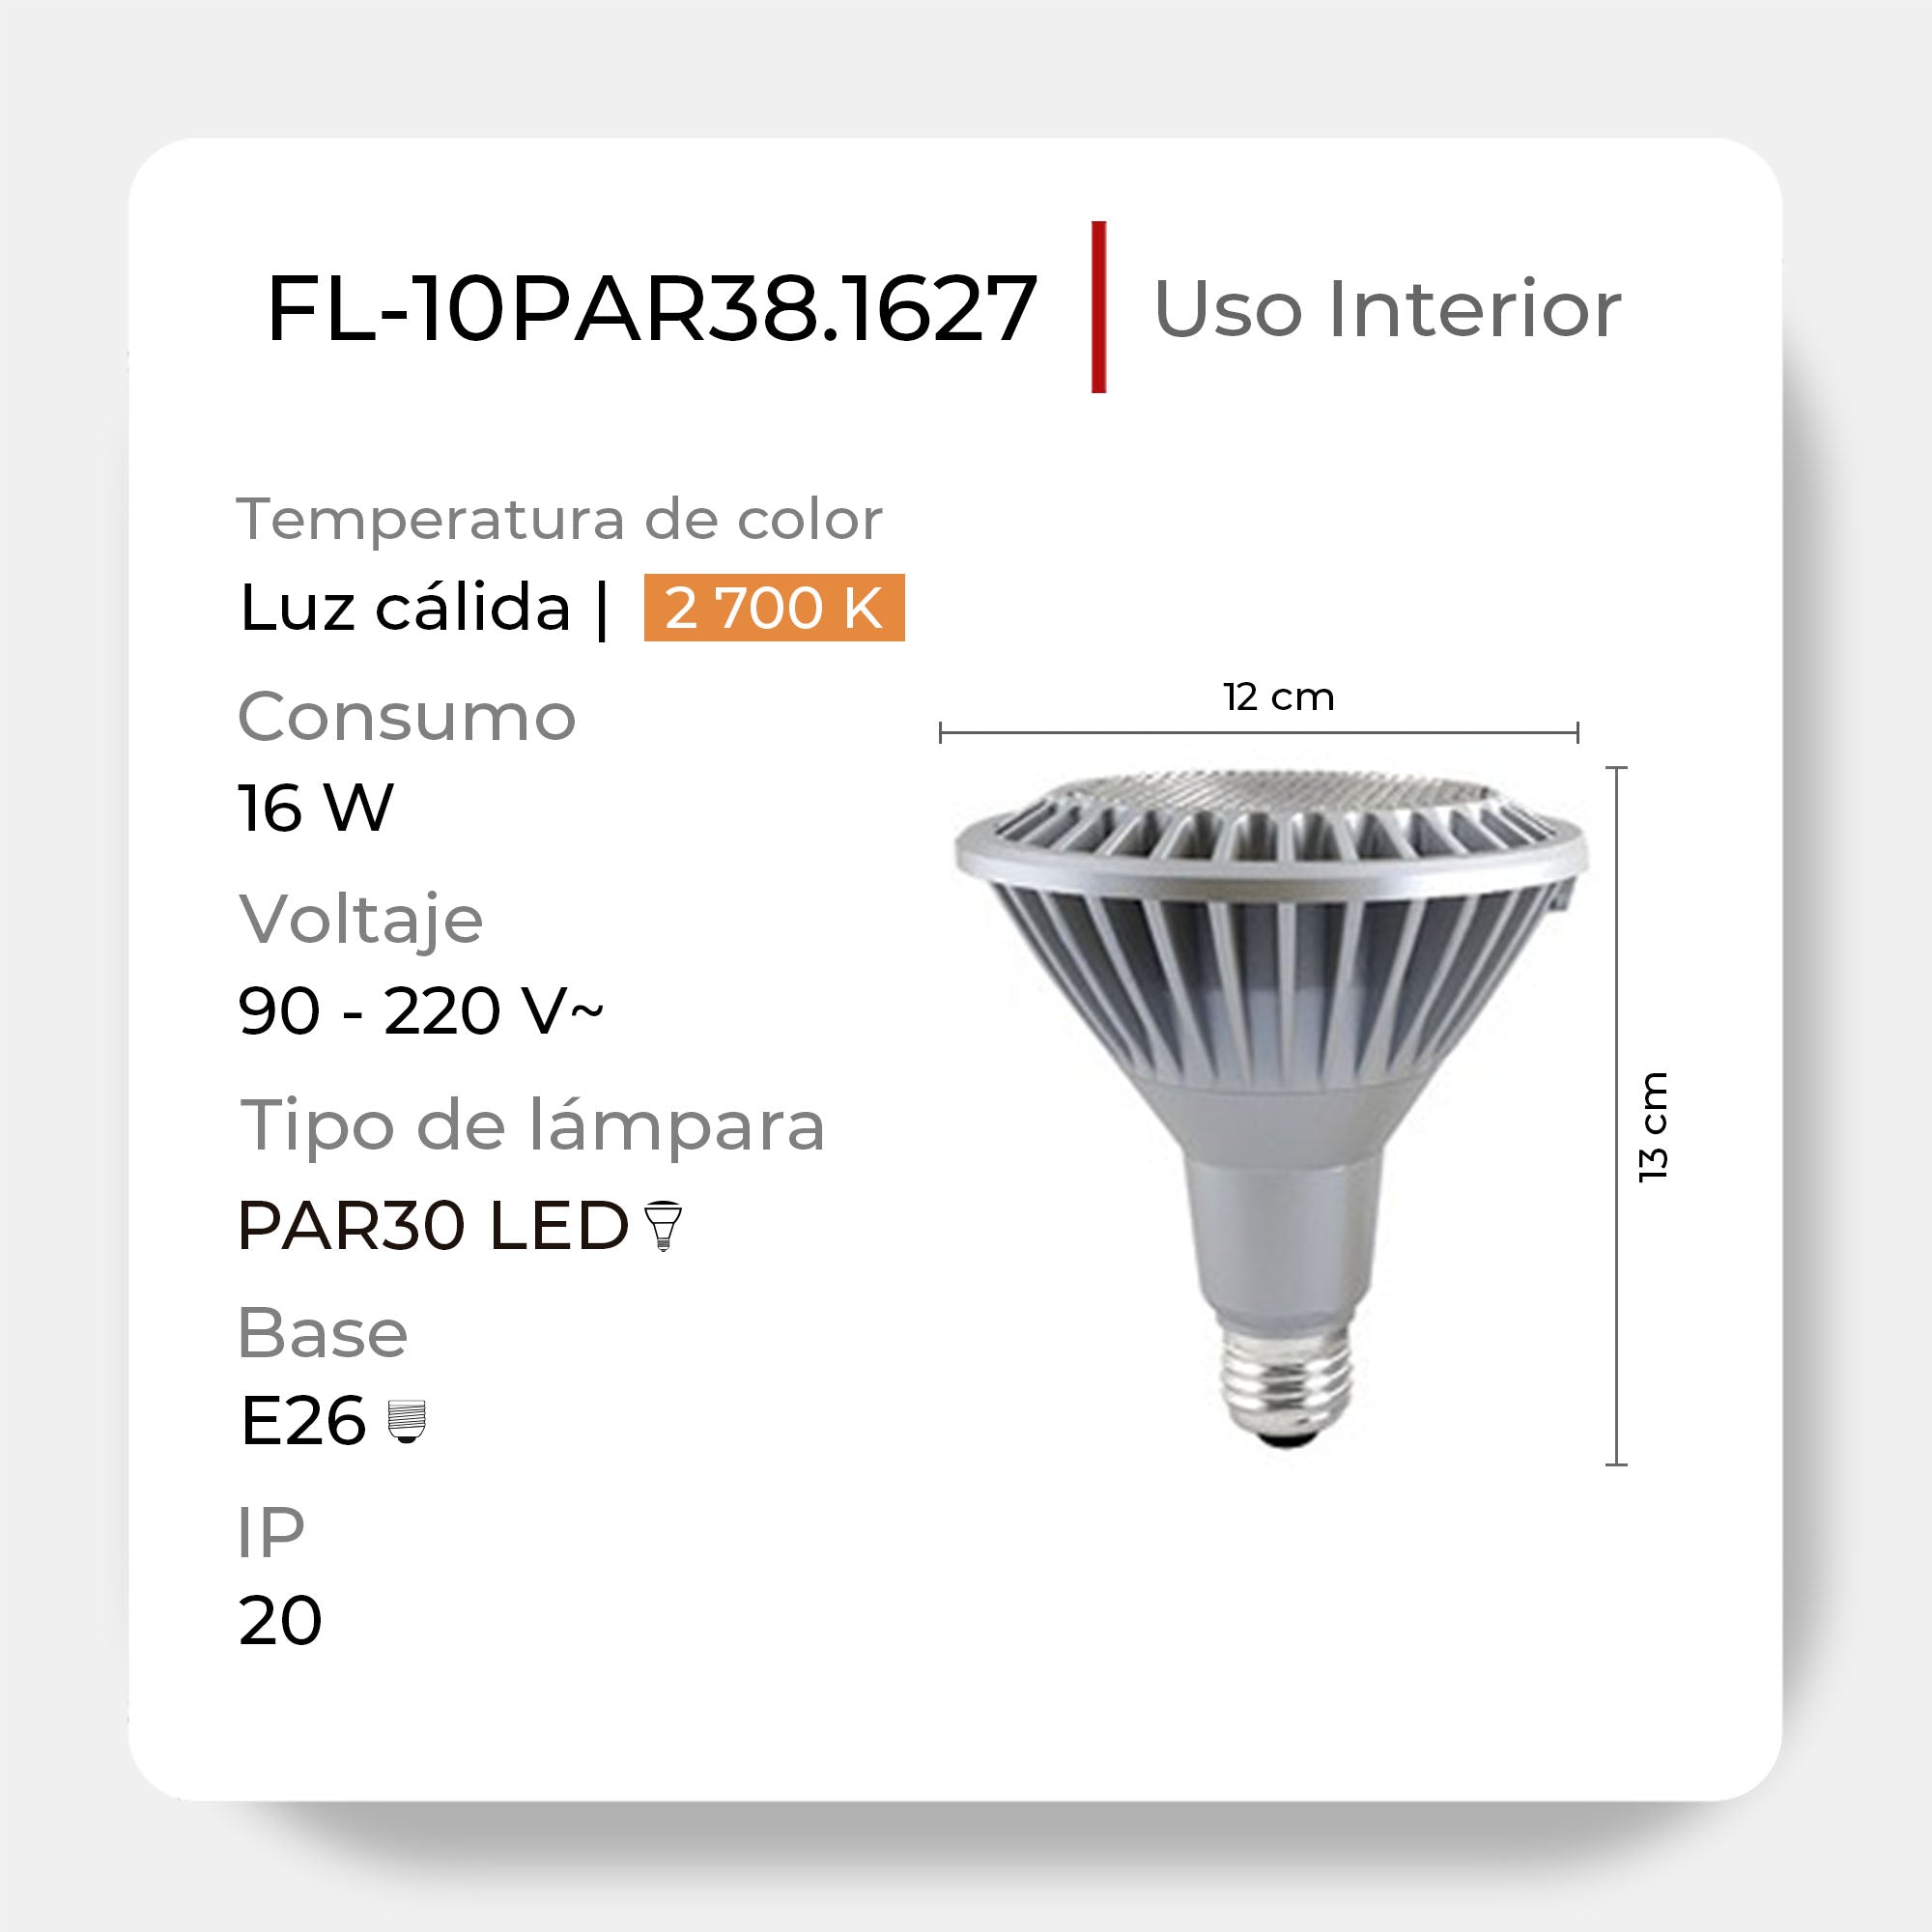 Lámpara LED PAR38 de Alta Eficiencia para Ambientes Acogedores, FL-10PAR38.1627